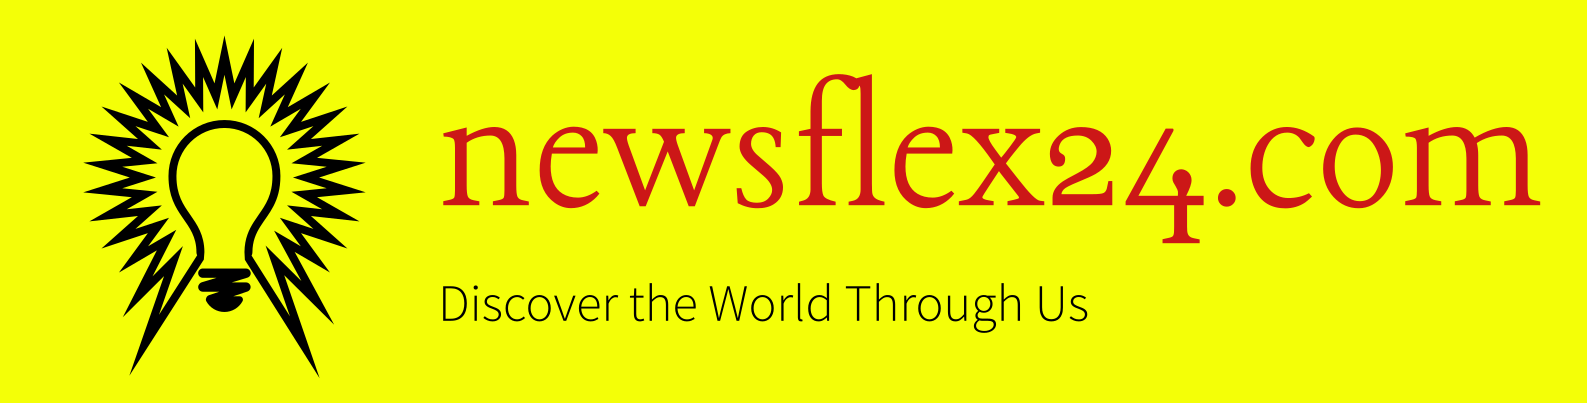 newsflex24